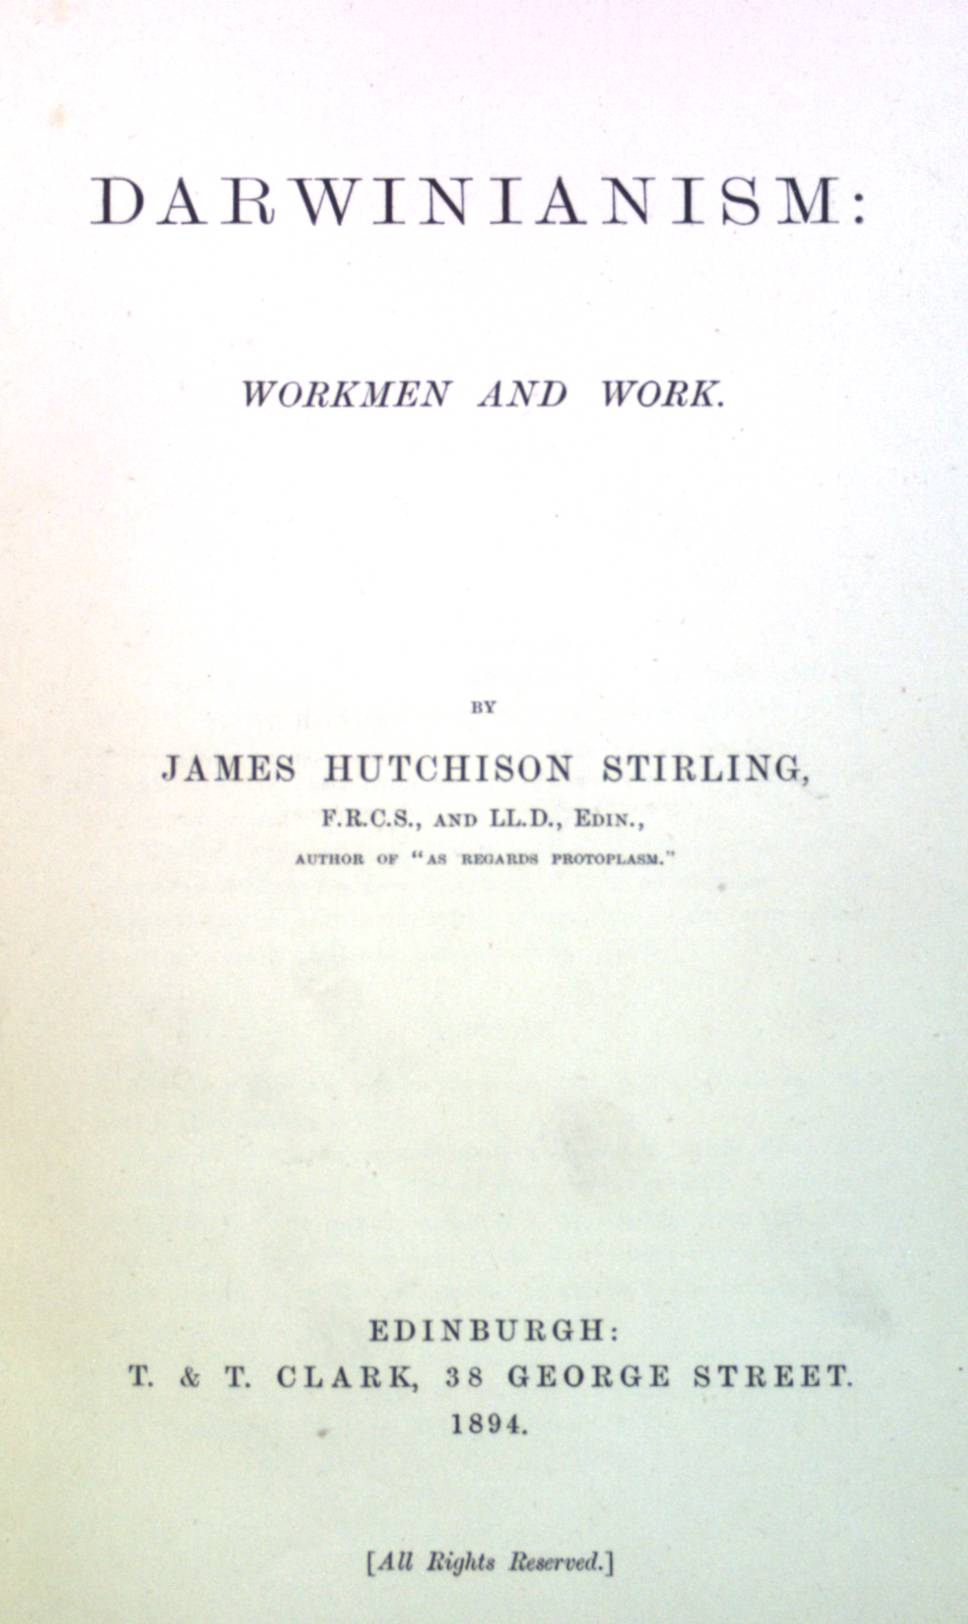 Darwinianism: Workmen and Work. - Hutchison Stirling, James